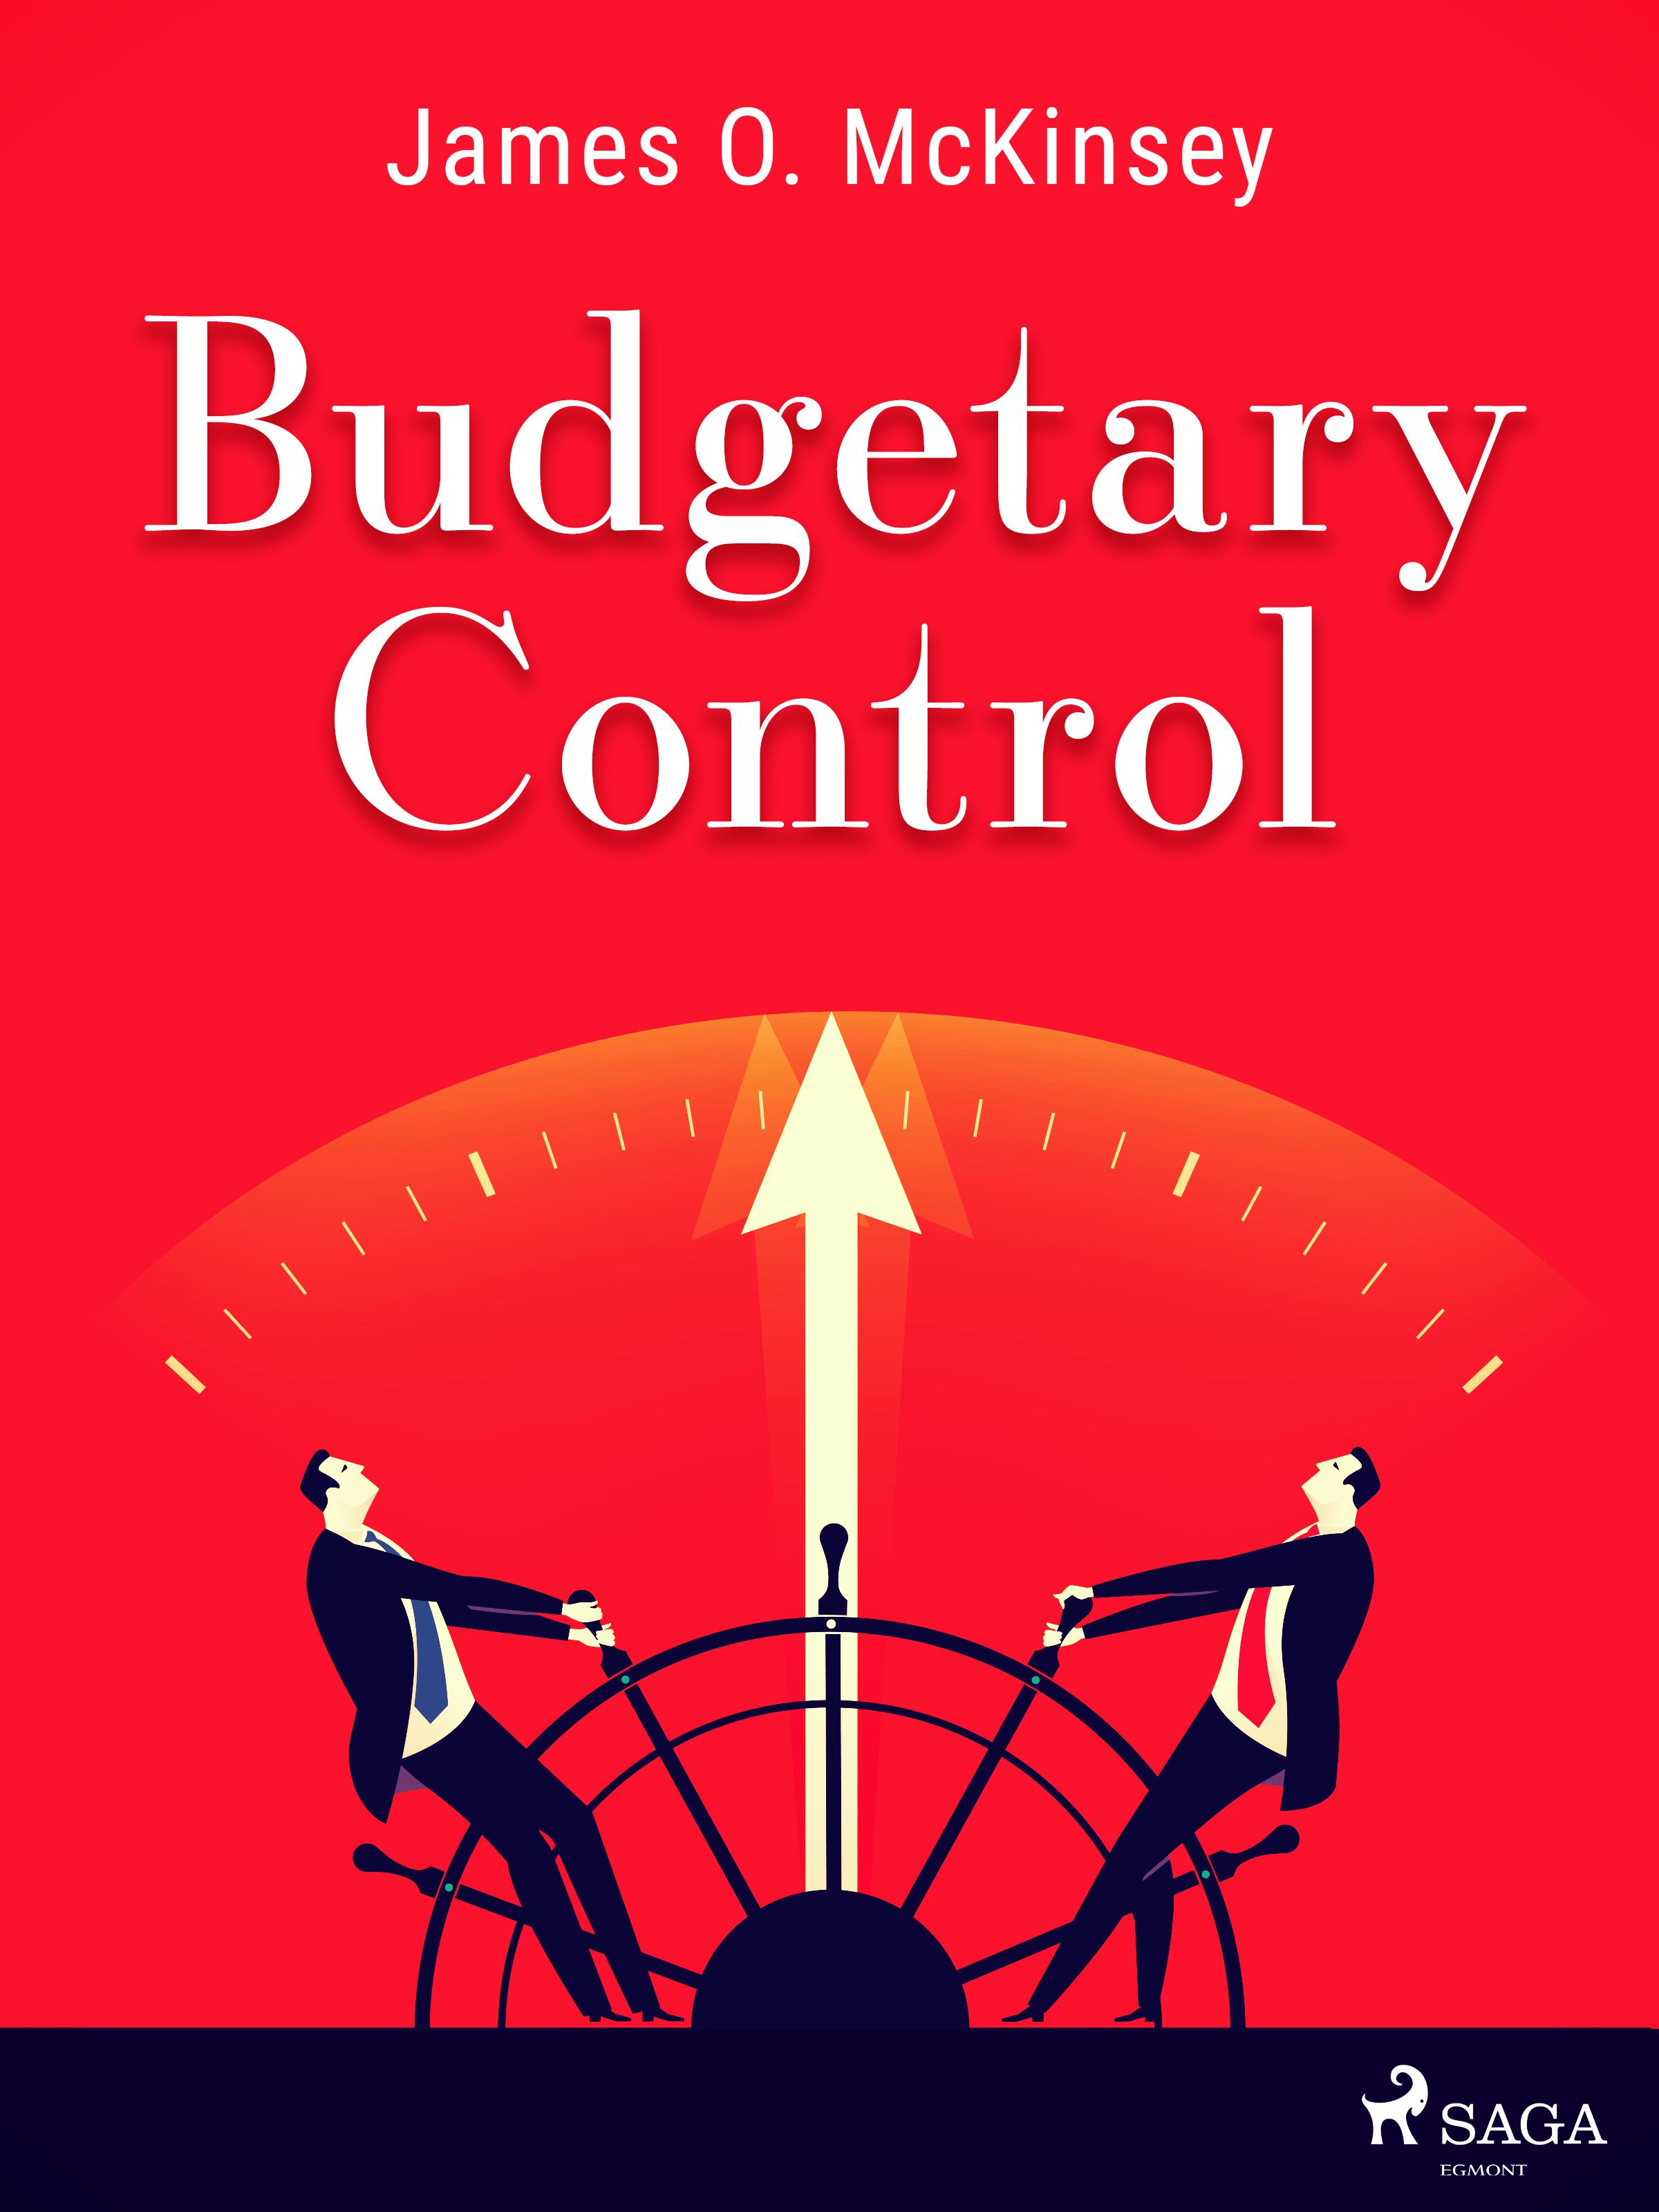 Budgetary Control, eBook by James O. McKinsey